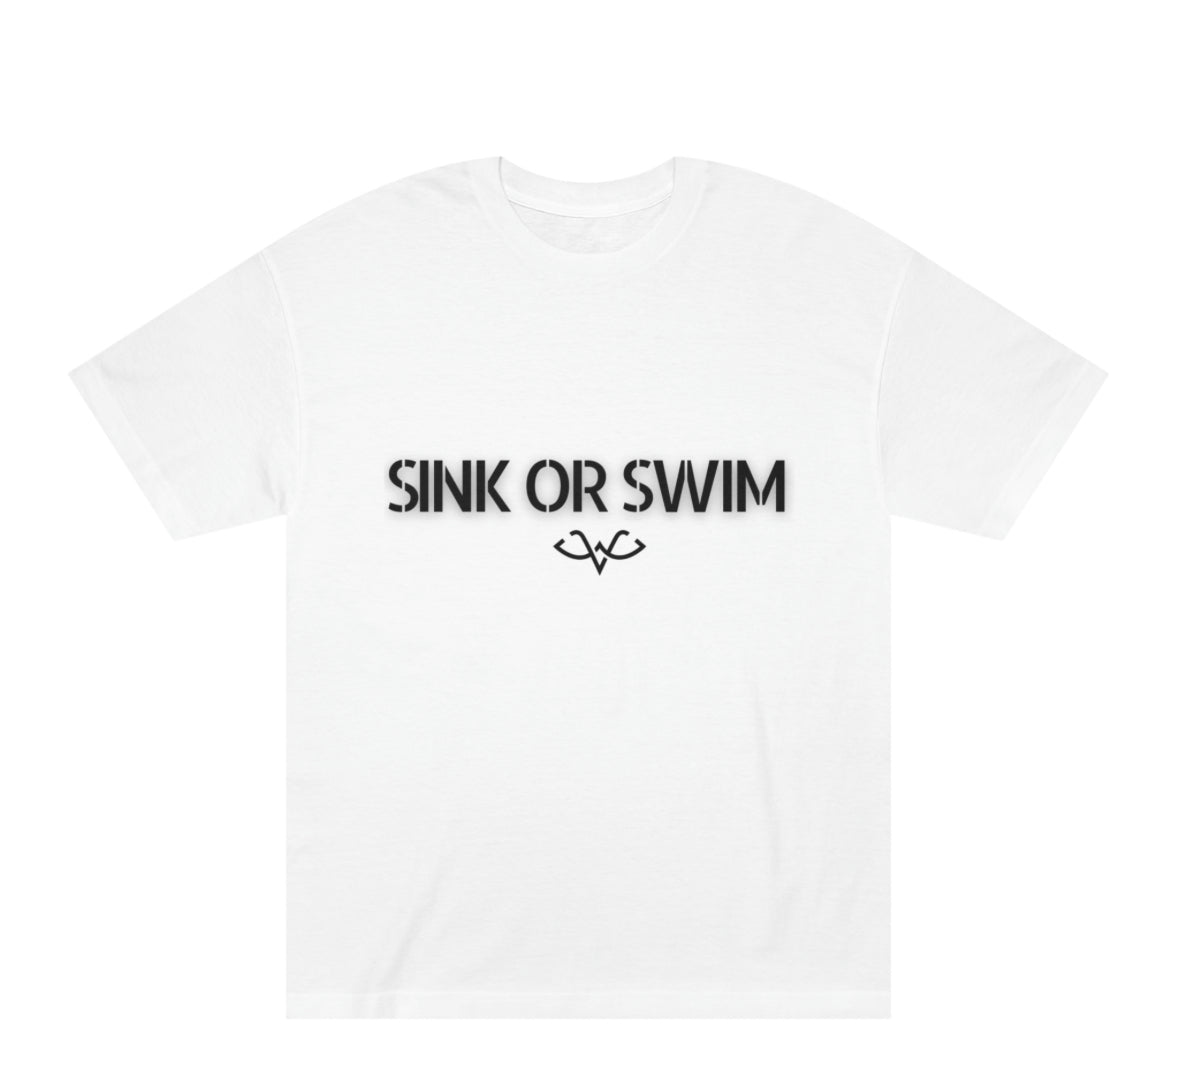 “SINK OR SWIM” T-Shirt